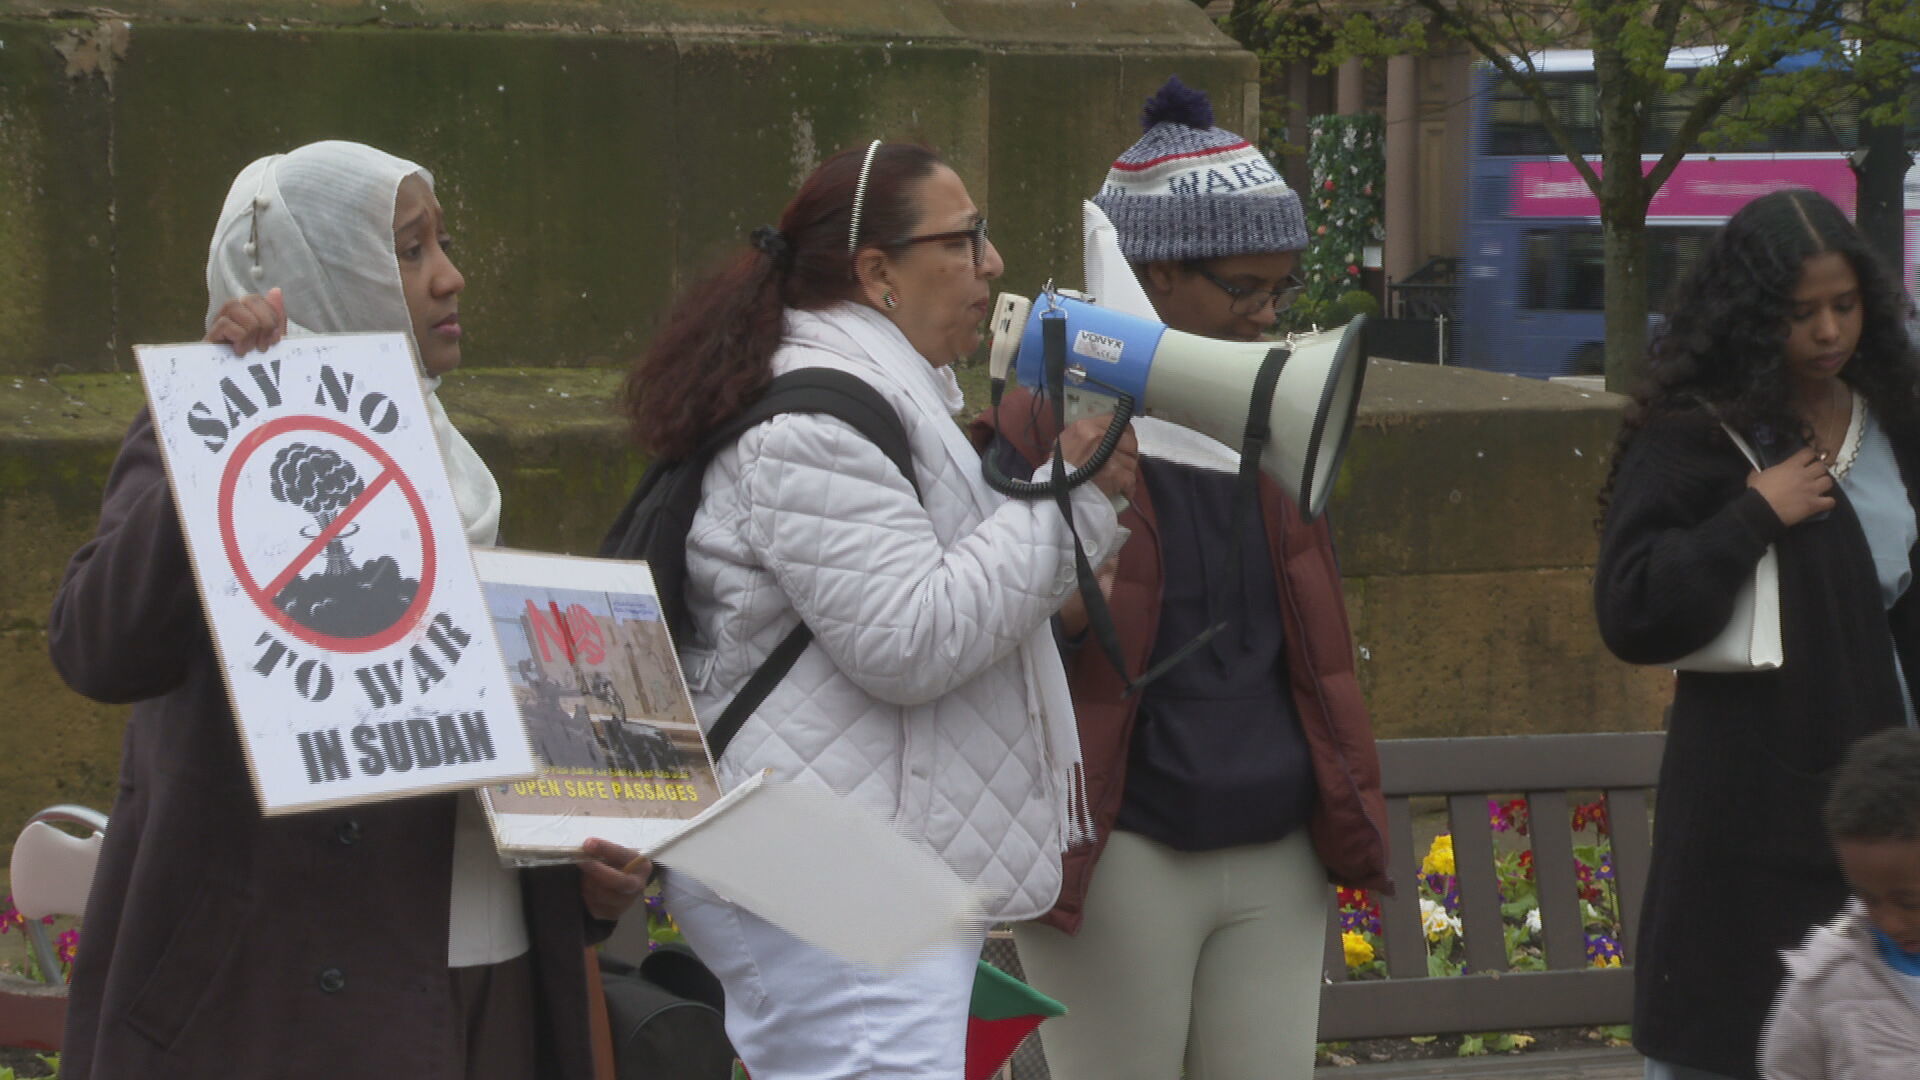 Protest against Sudan war in Glasgow's George Square